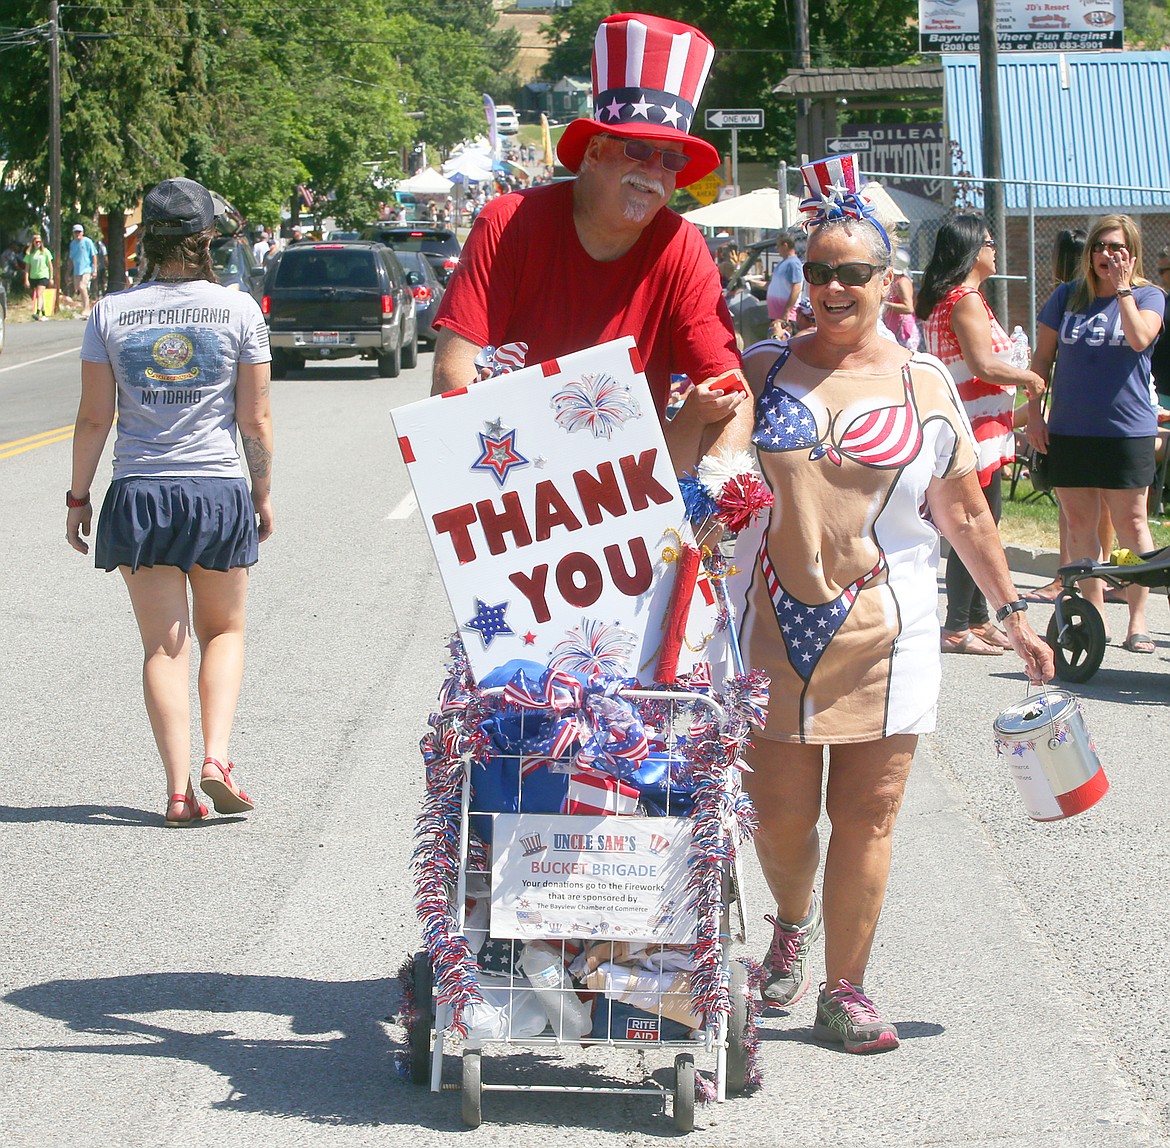 Jamie Berube and Bob Prince were “Uncle Sam’s Bucket Brigade” on Saturday at the Bayview Daze parade.